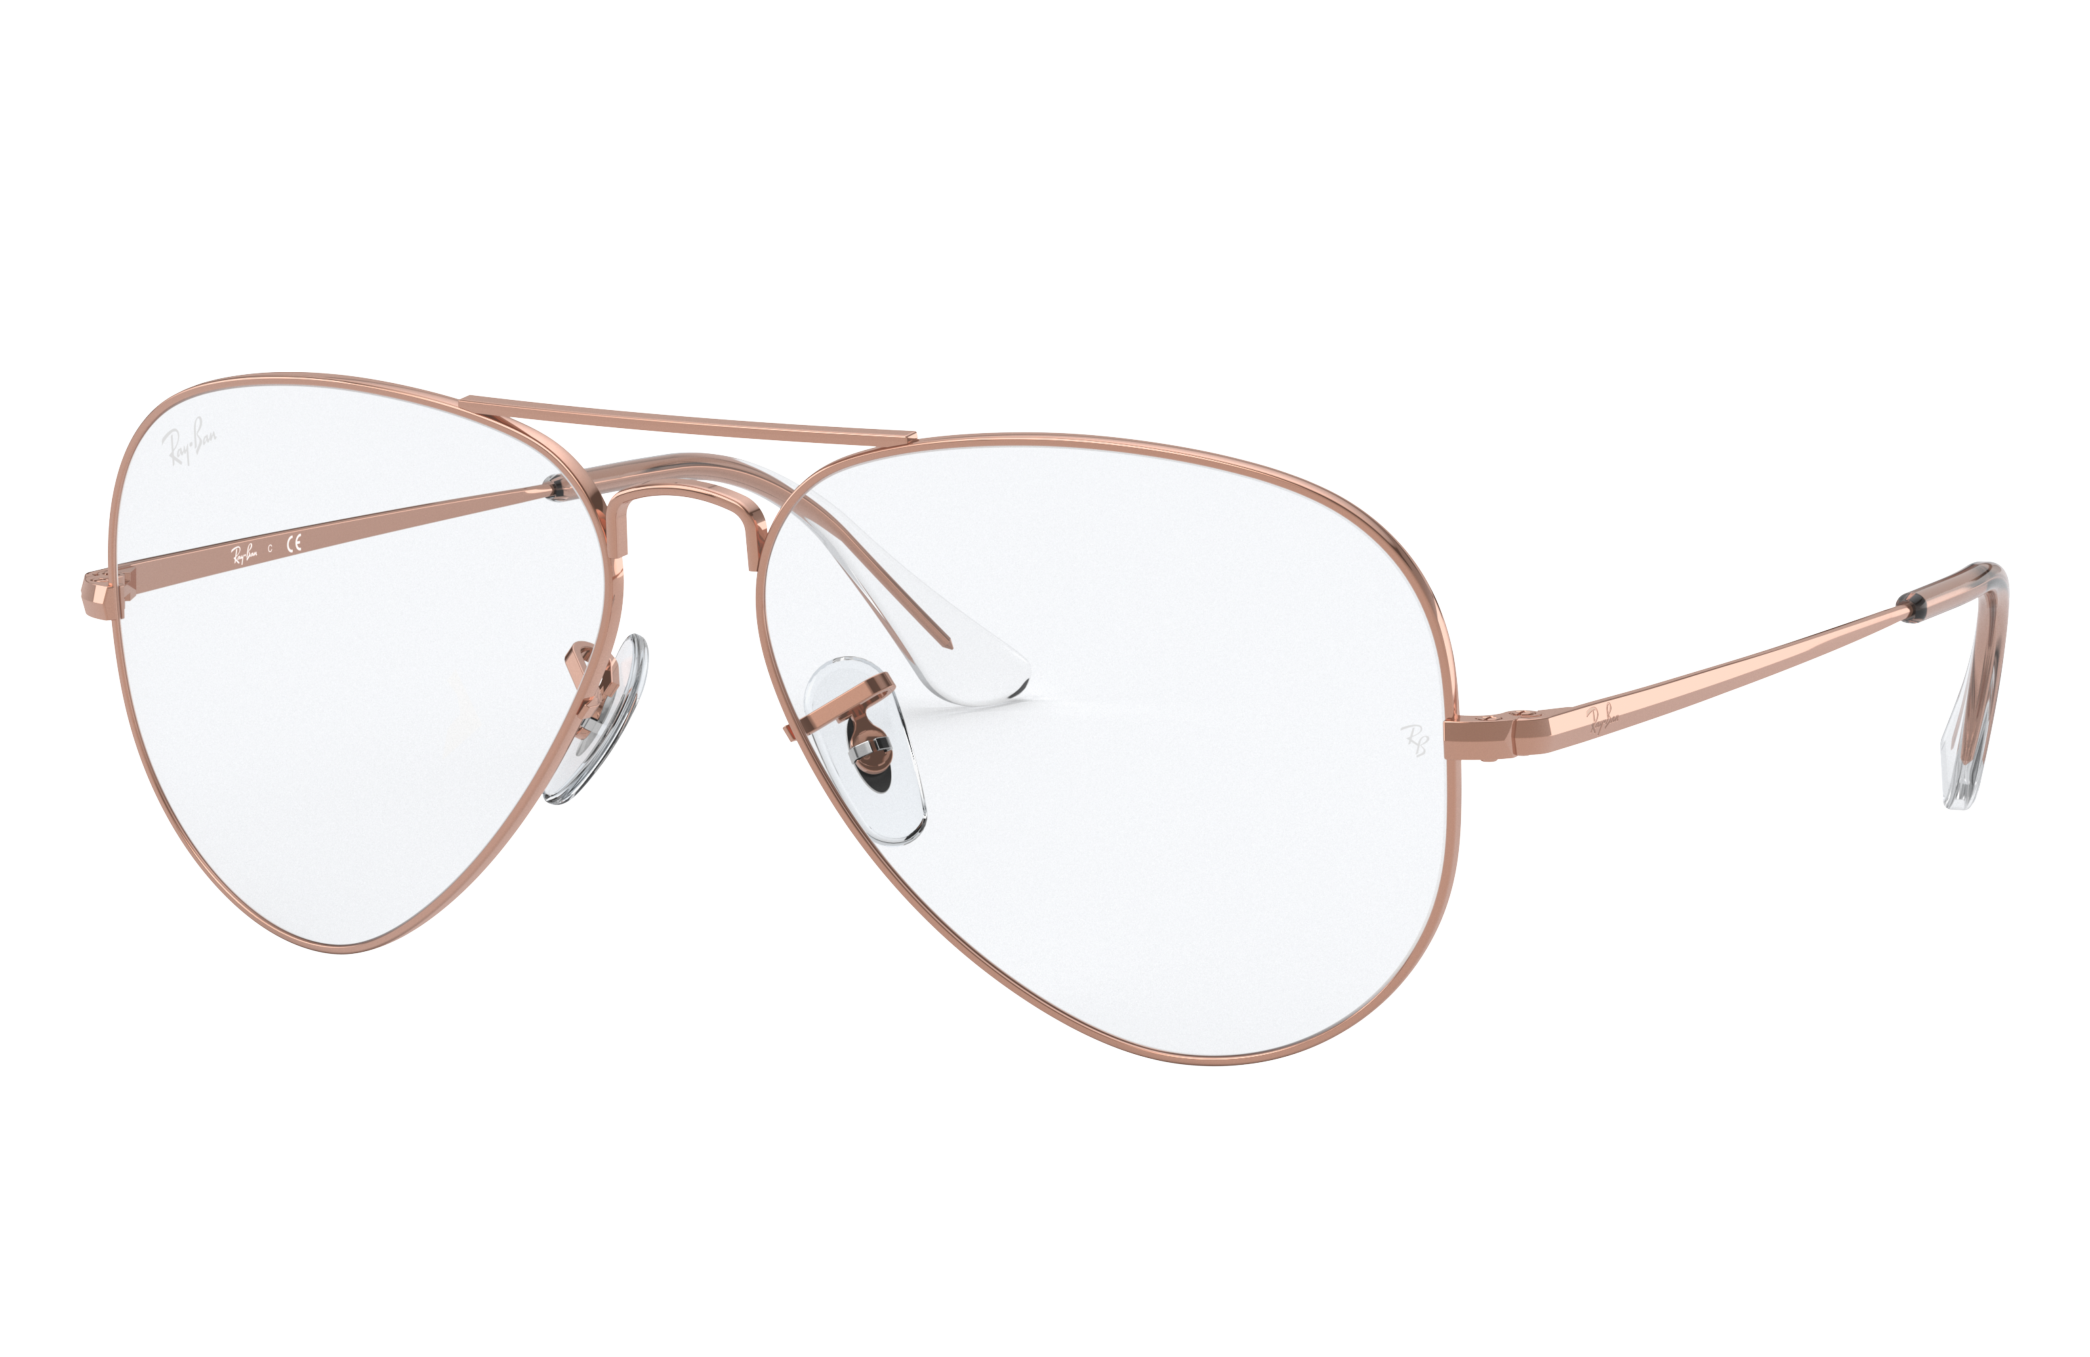 Aviator Optics Eyeglasses with Shiny Rose Gold Frame | Ray-Ban®